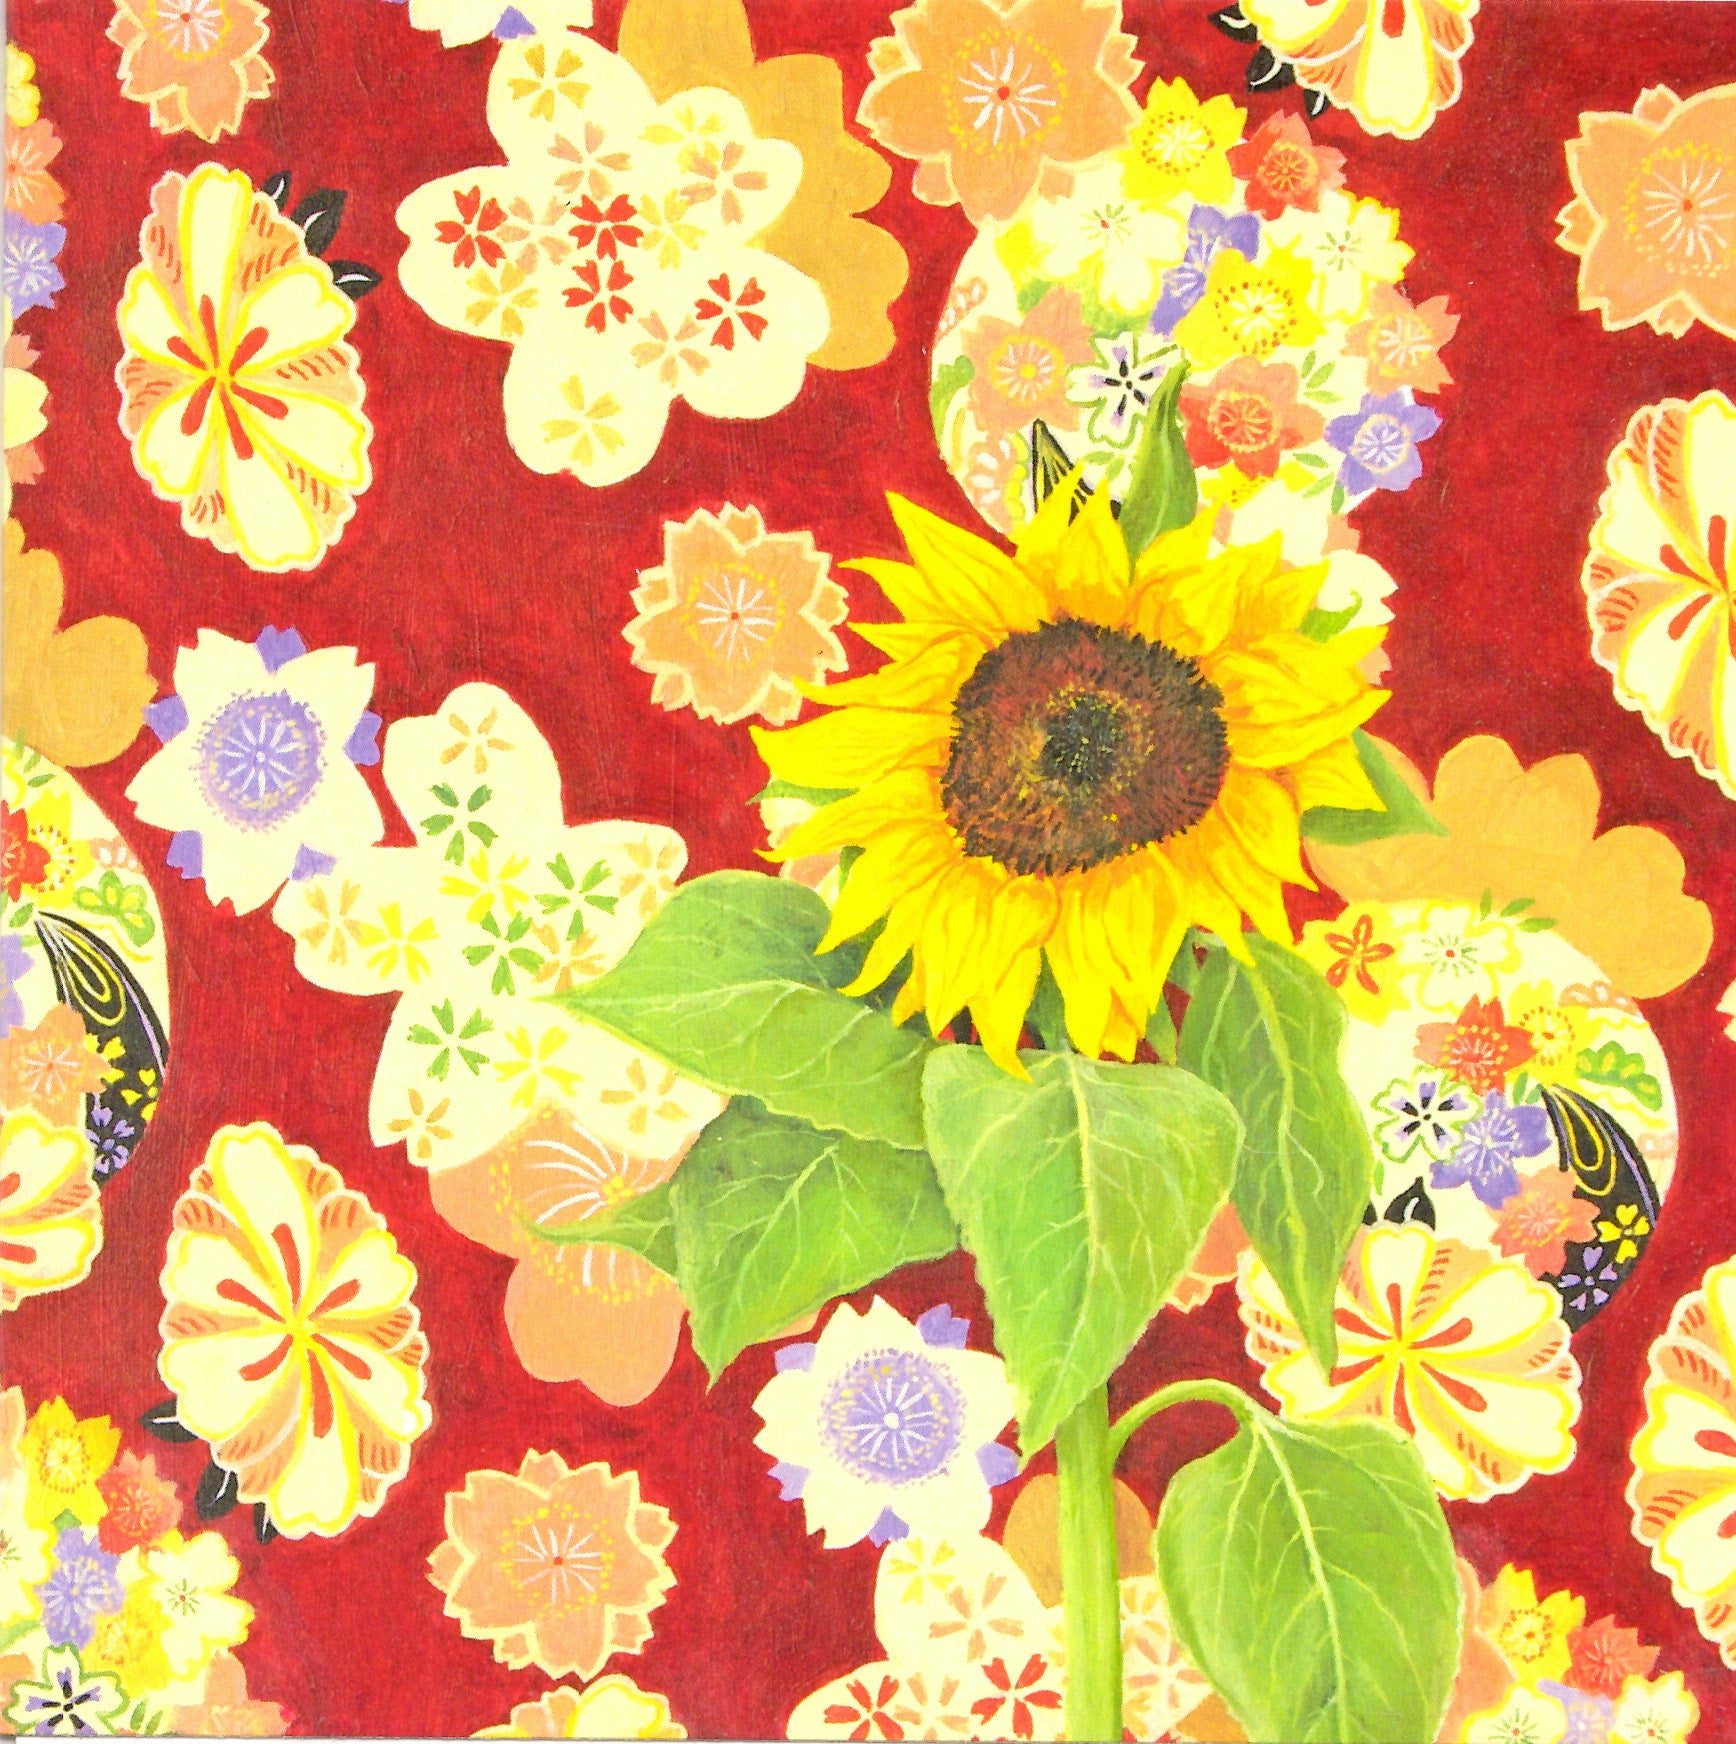 FINE ART GREETING CARD Sunflower GEORGIA COX